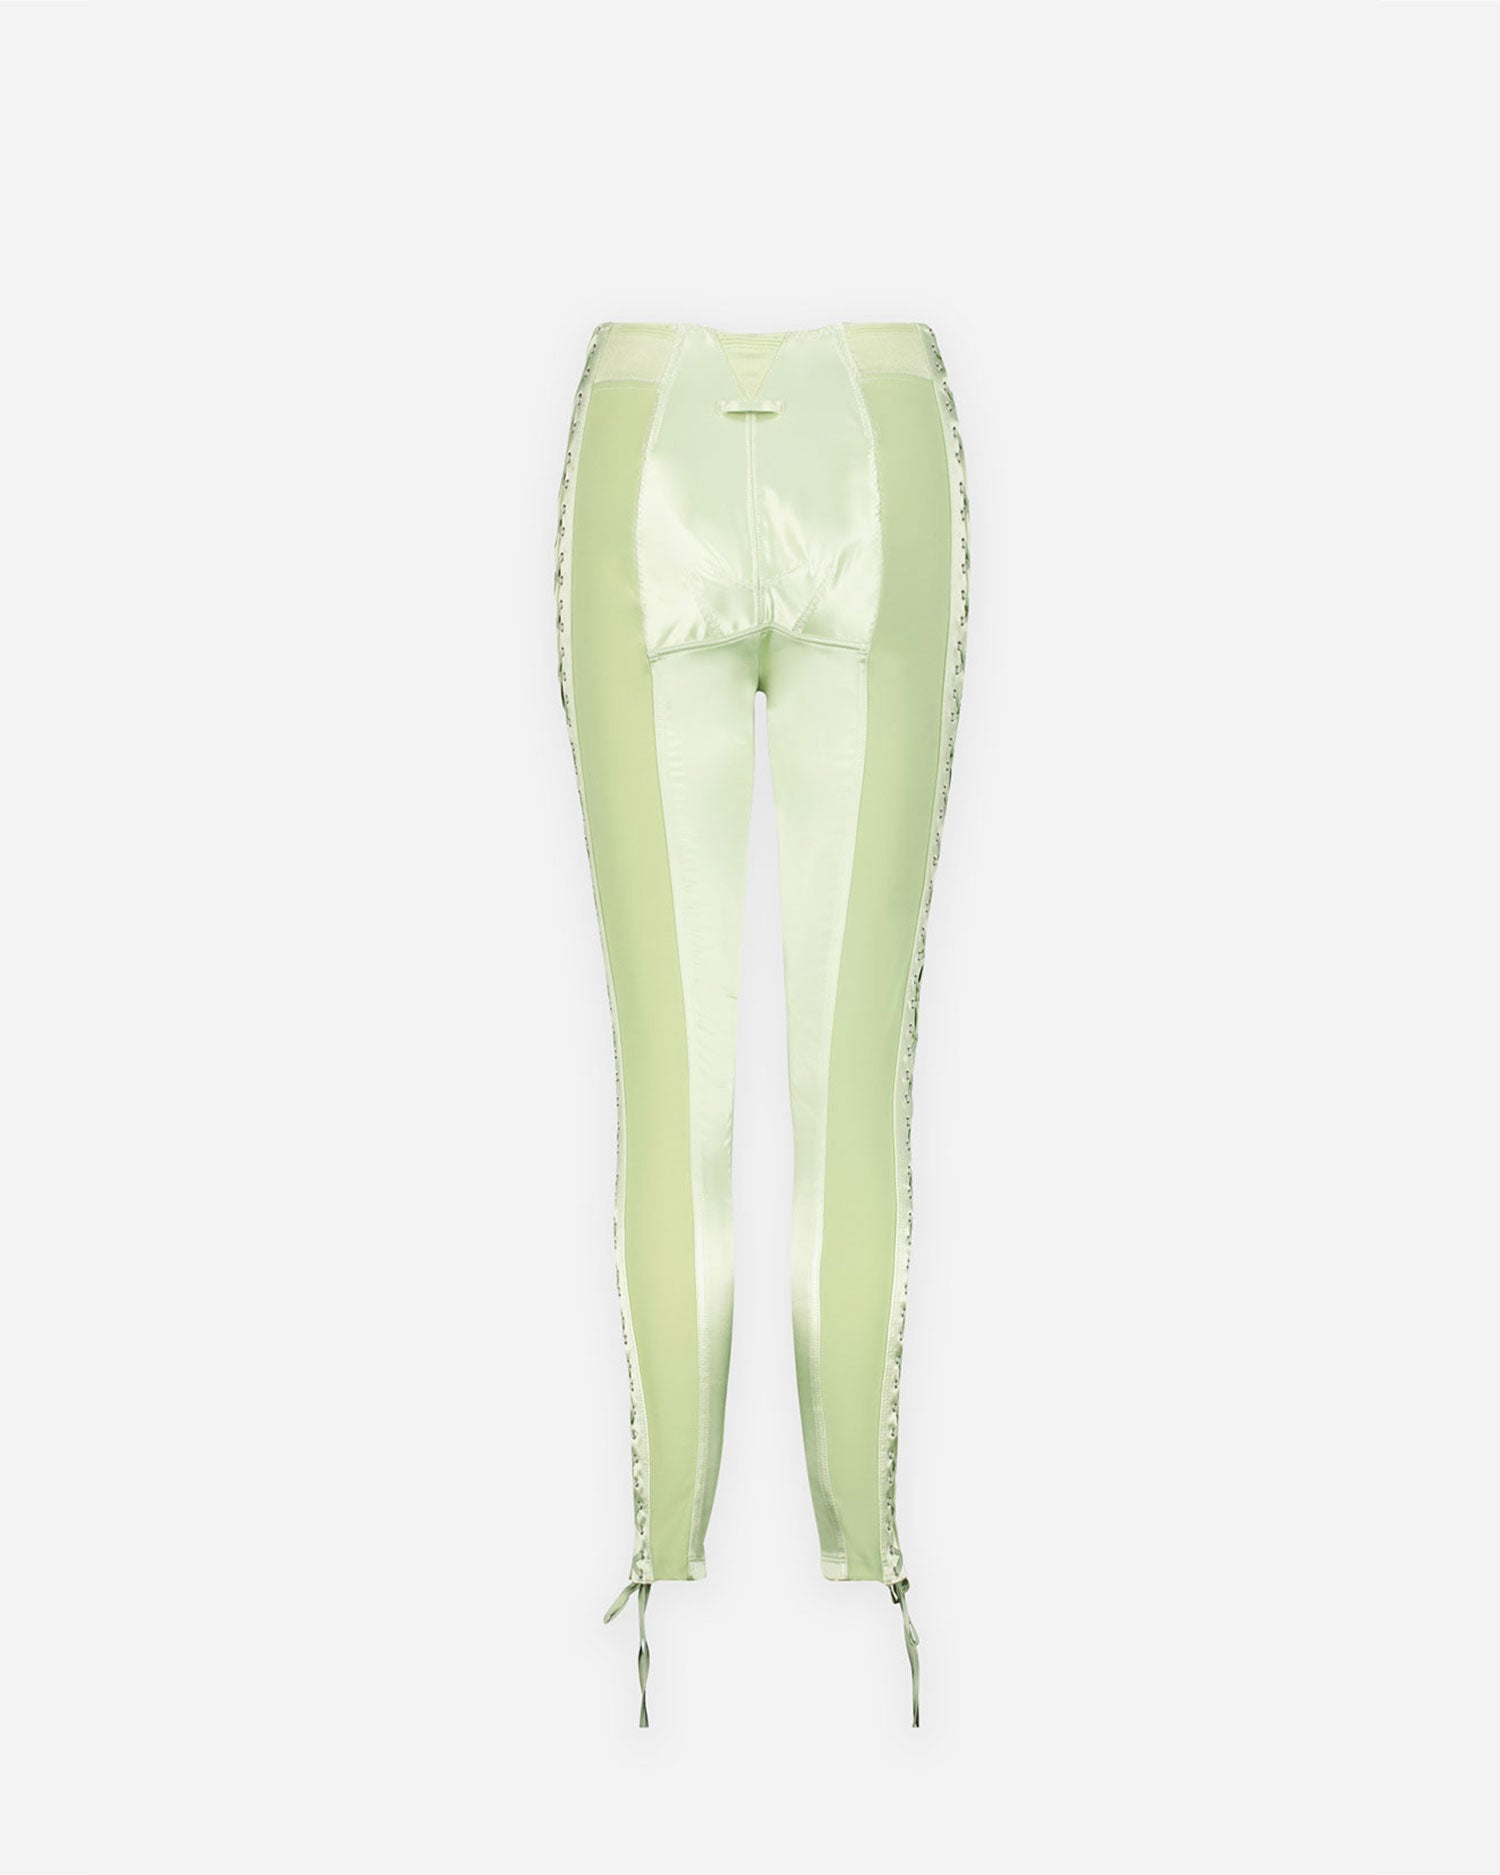 The Iconic Leggings - Mint - Pants - Jean Paul Gaultier x Lotta Volkova - Elevastor